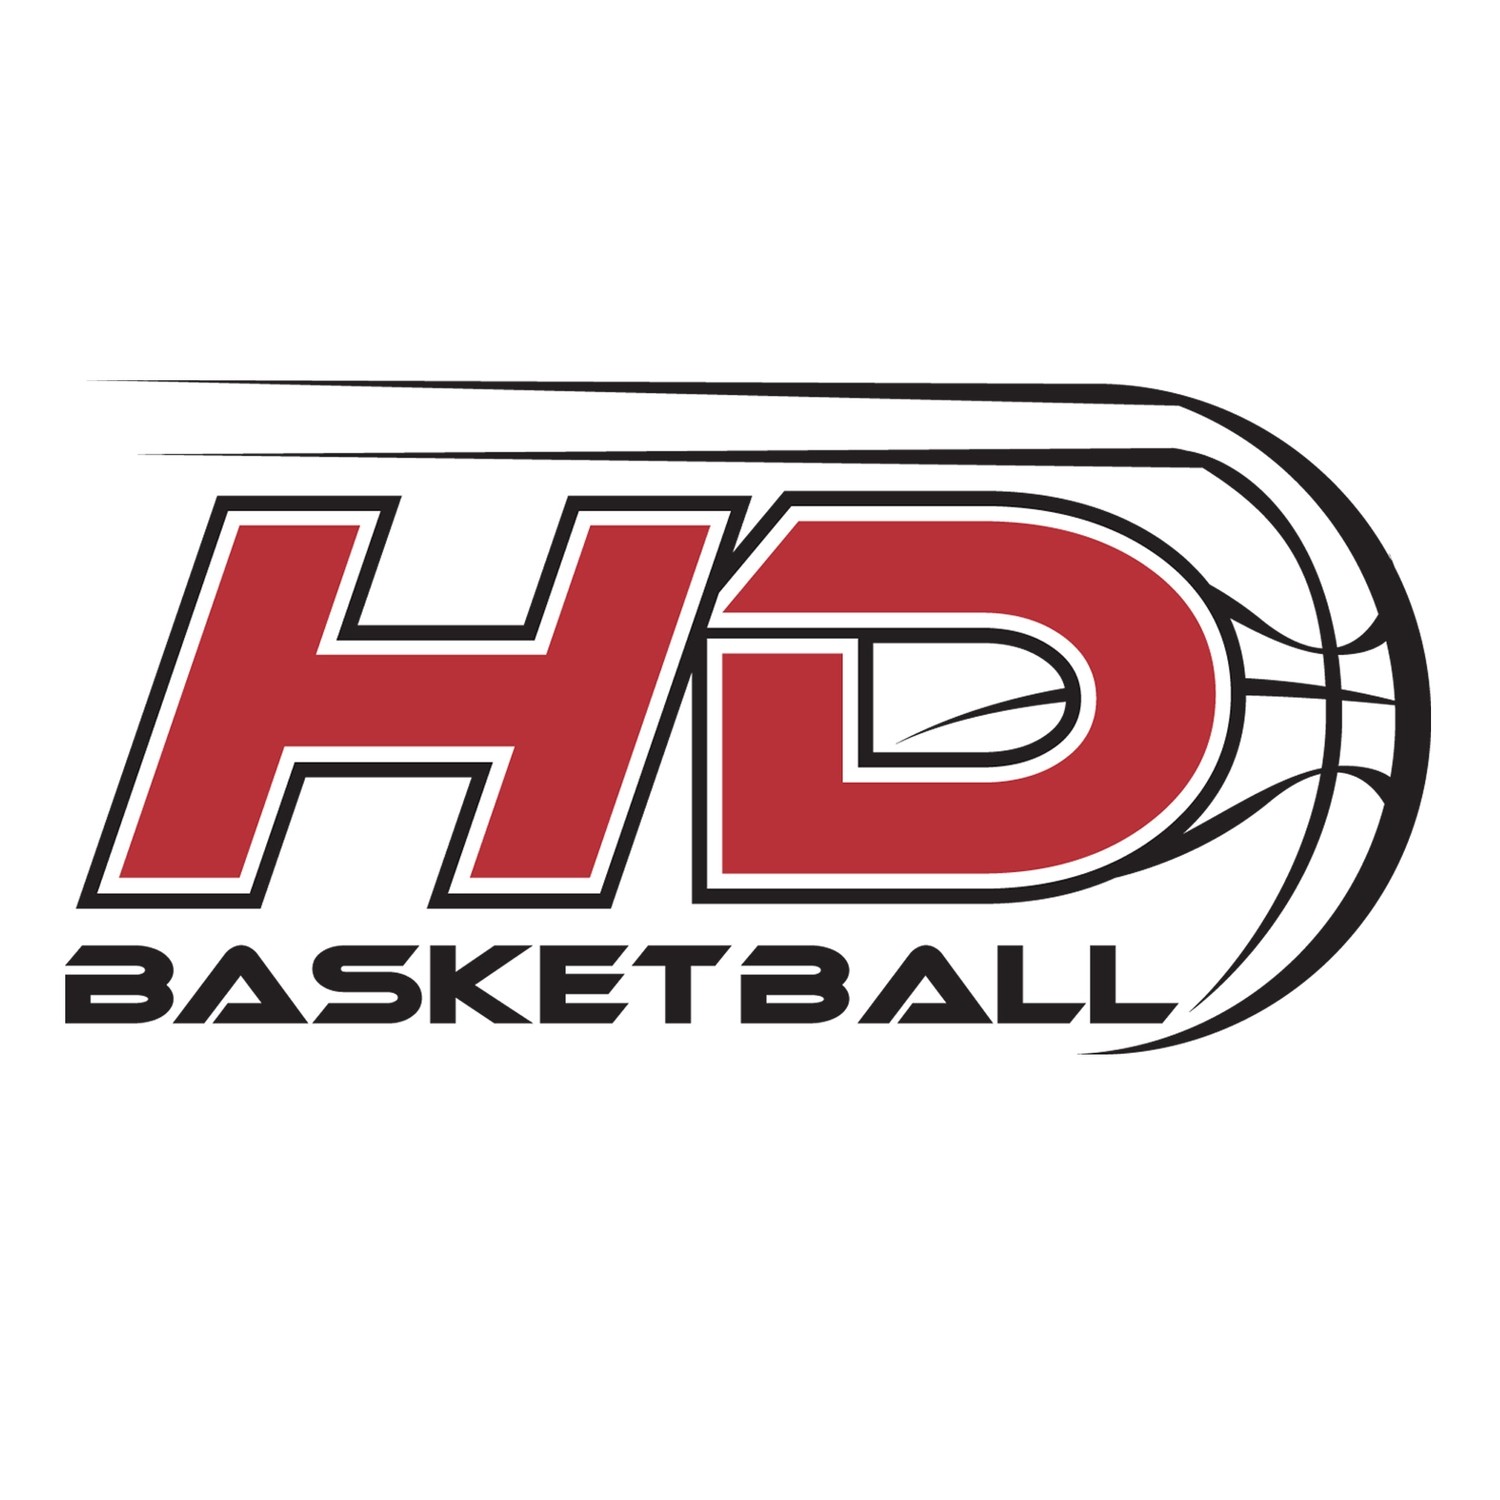 HD Basketball: New Player Fee